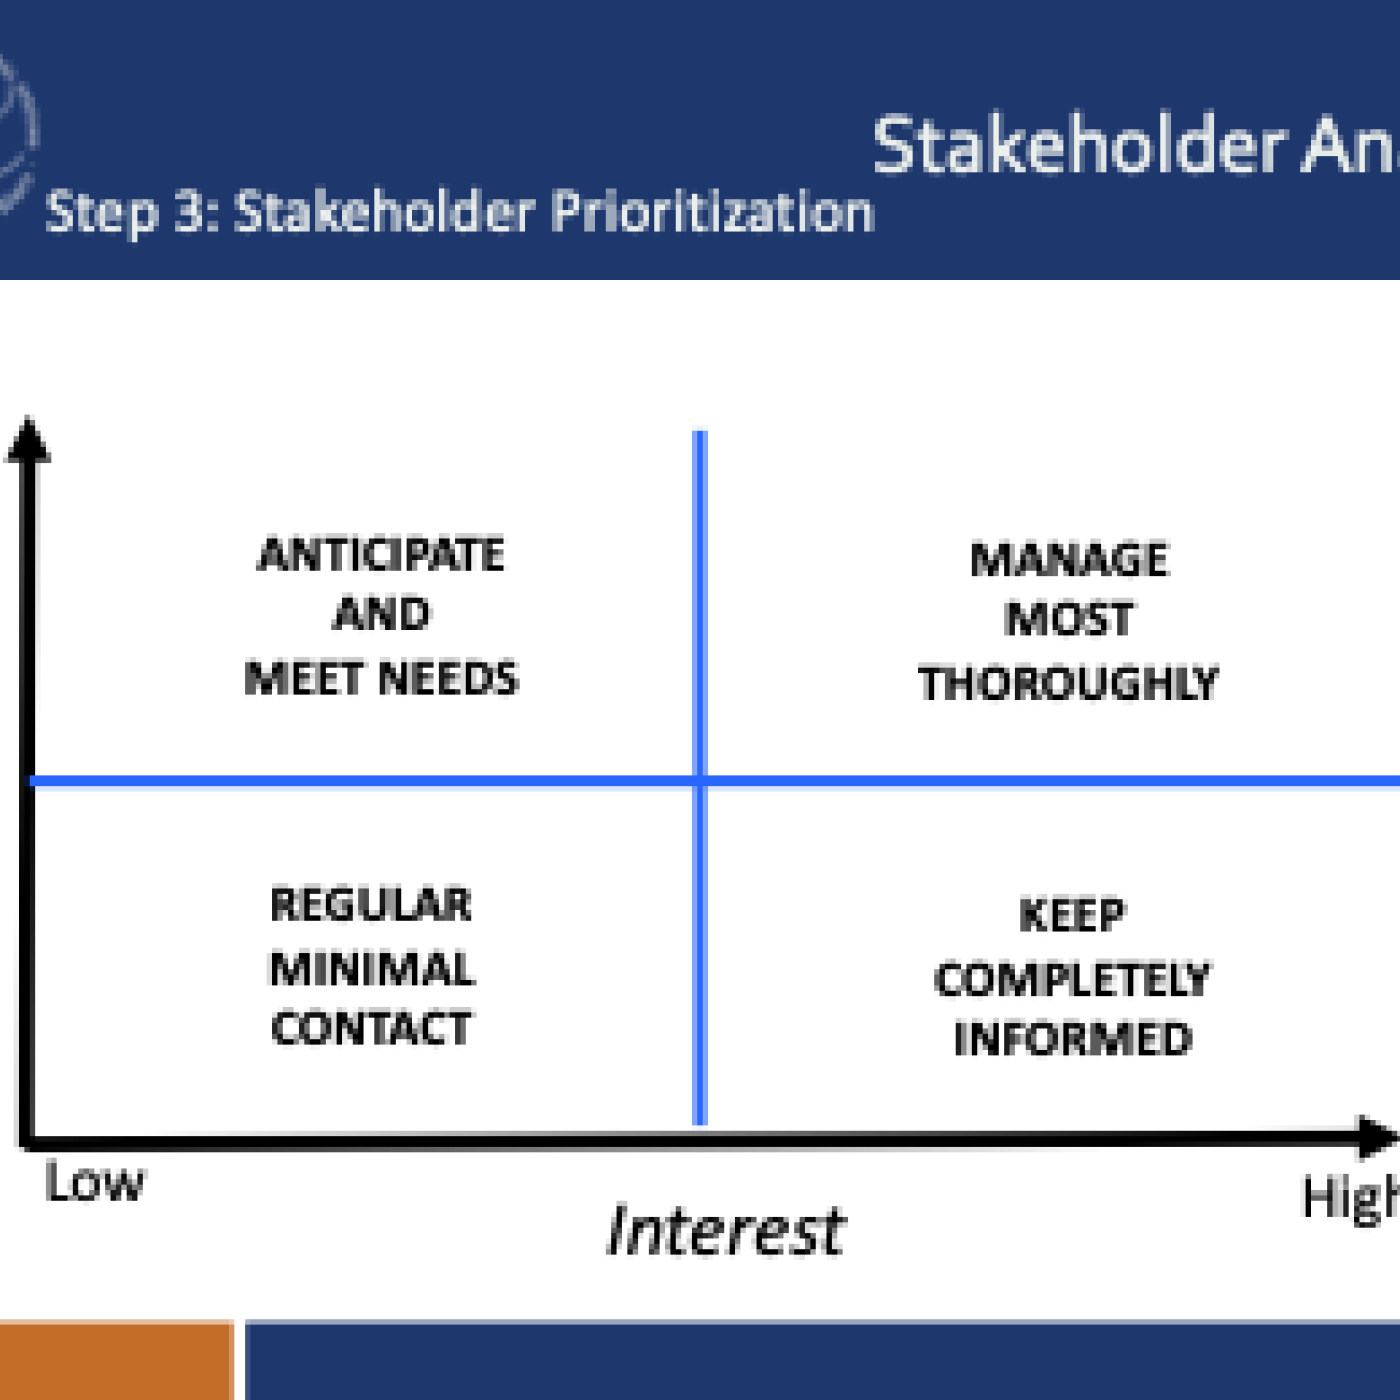 Stakeholder analysis - prioritization